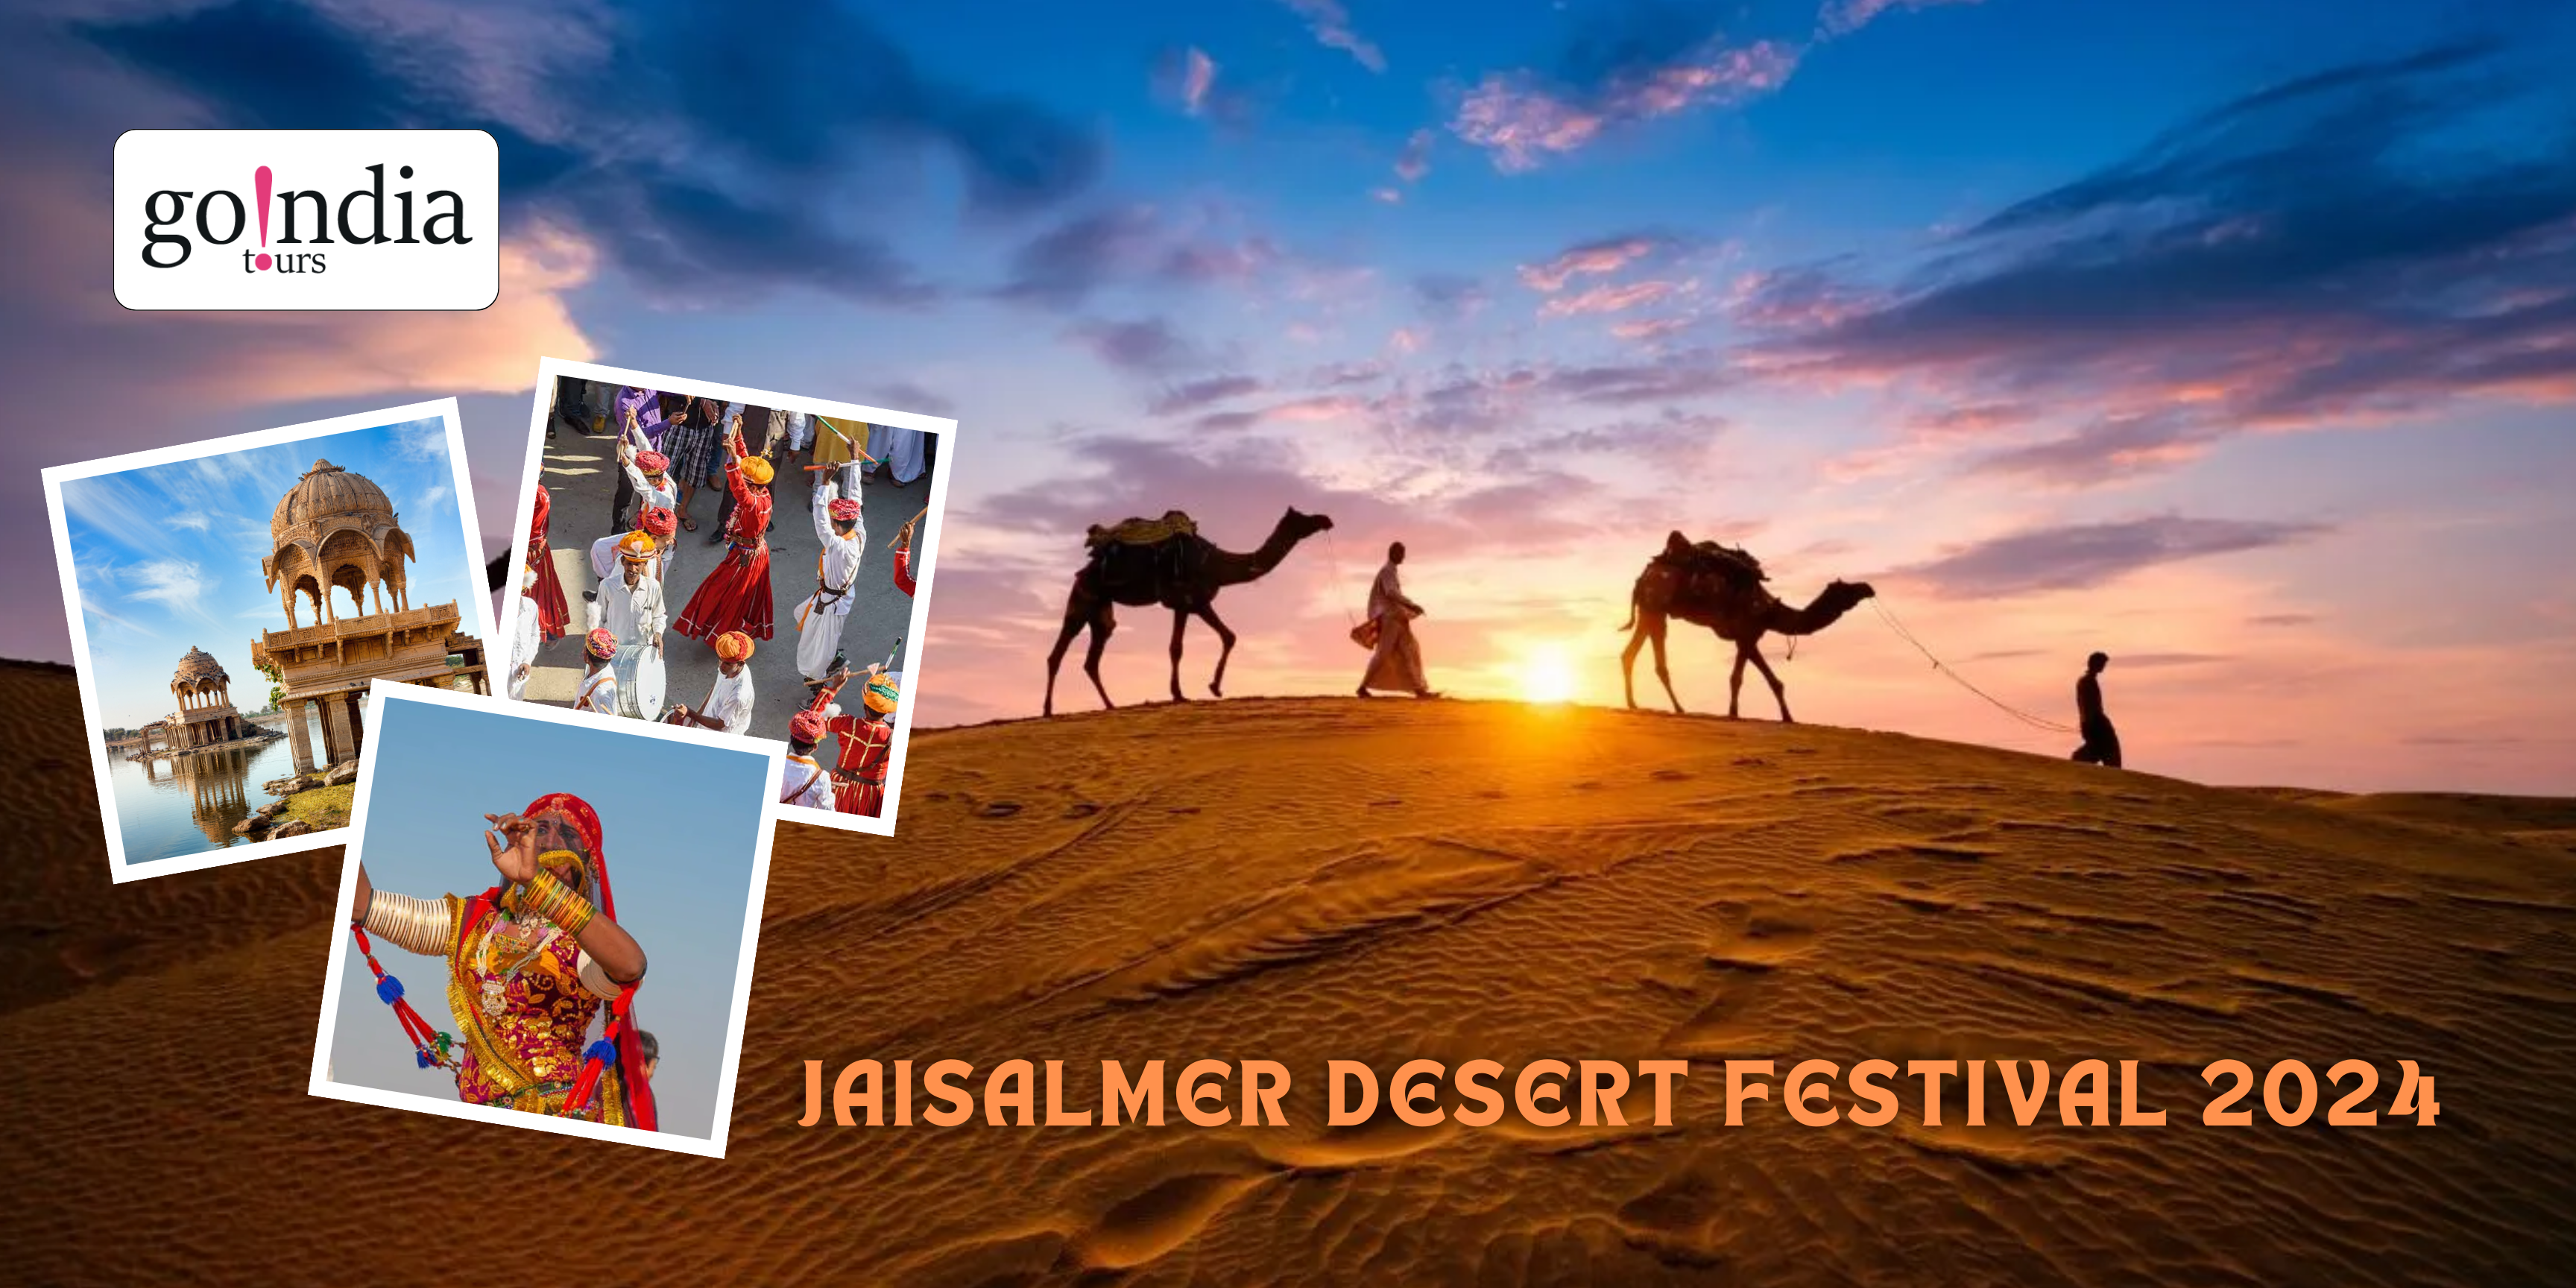 Jaisalmer Desert Festival 2024: Date, Location, Time, and Highlights